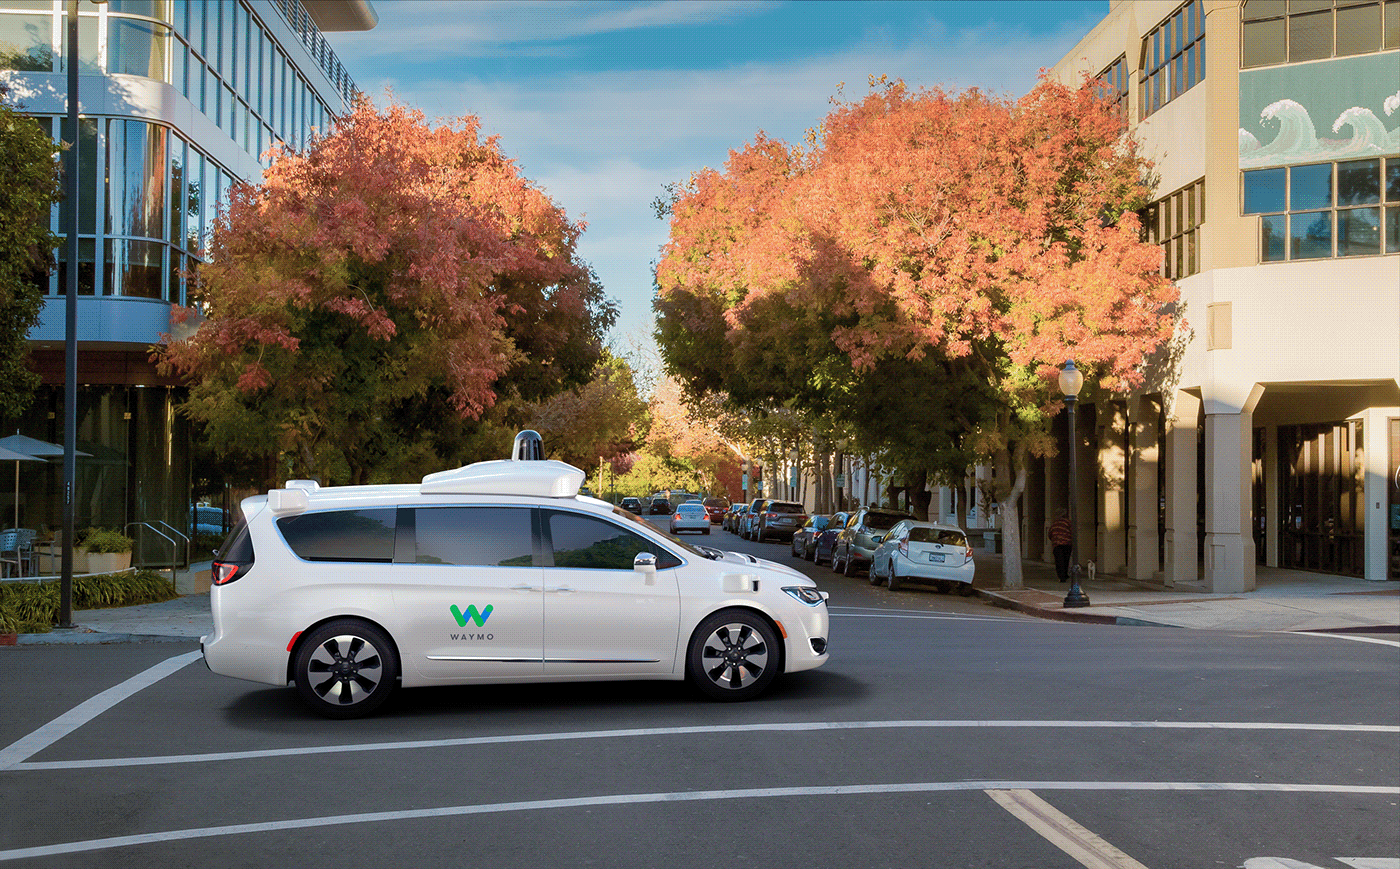 googlex waymo chrysler Pacifica ehybrid white car MiniVan self-driving Autonomous VRED